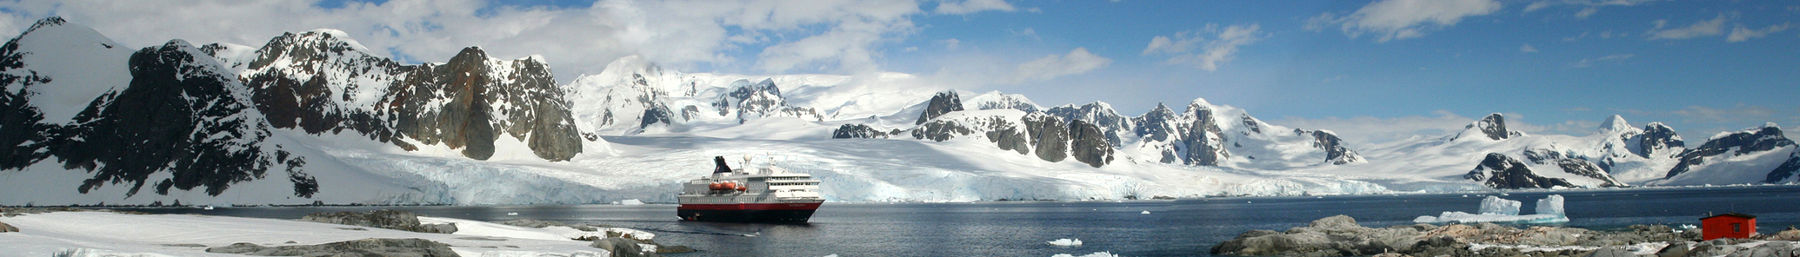 Península Antártica-banner.jpg